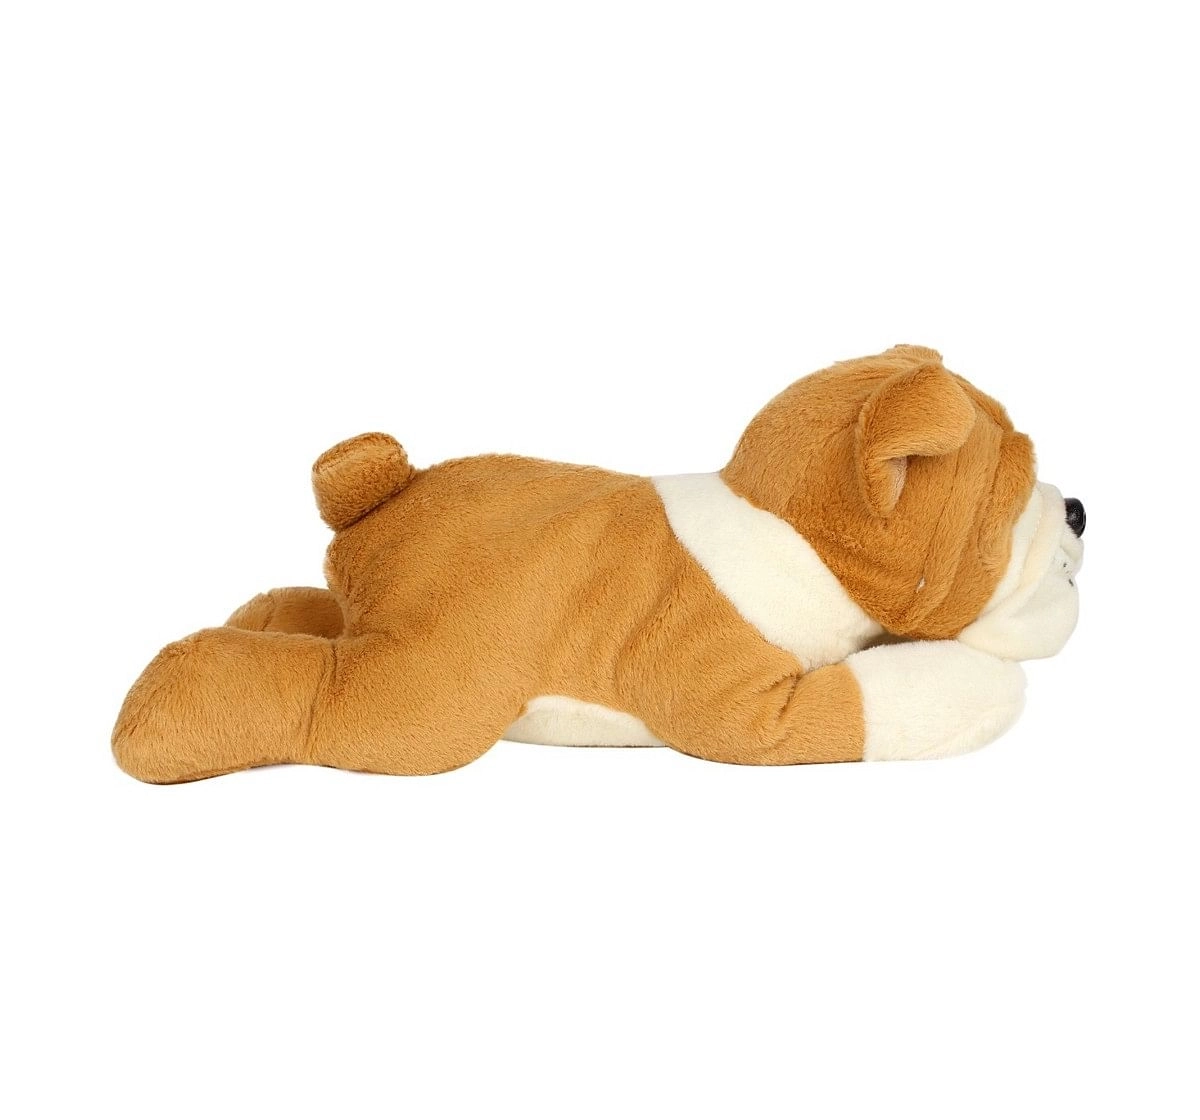 Cuddles Sleeping Bulldog 40 Cms Plush Toy for New Born Kids age 0M+